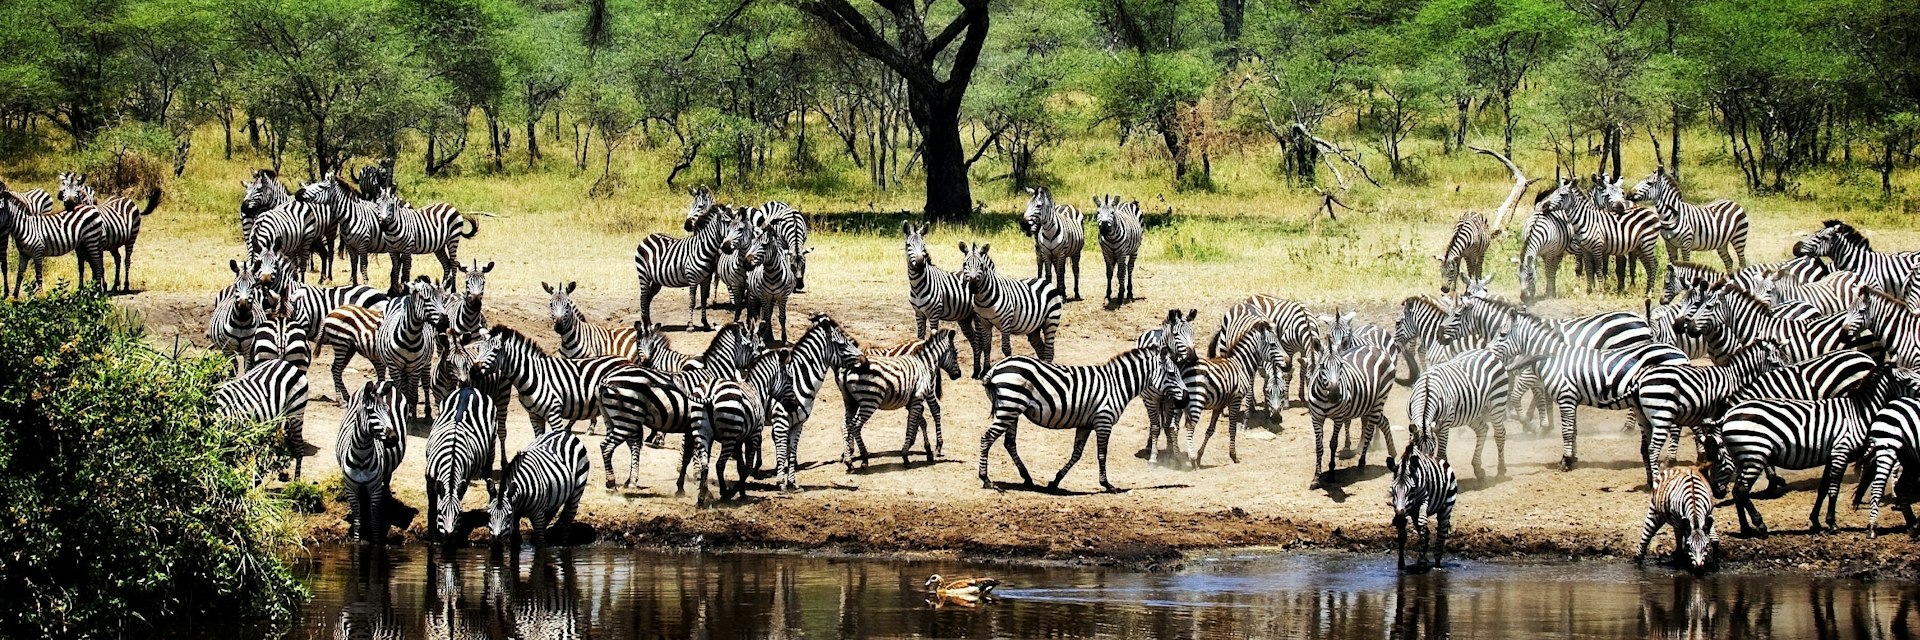 Burchell zebras 